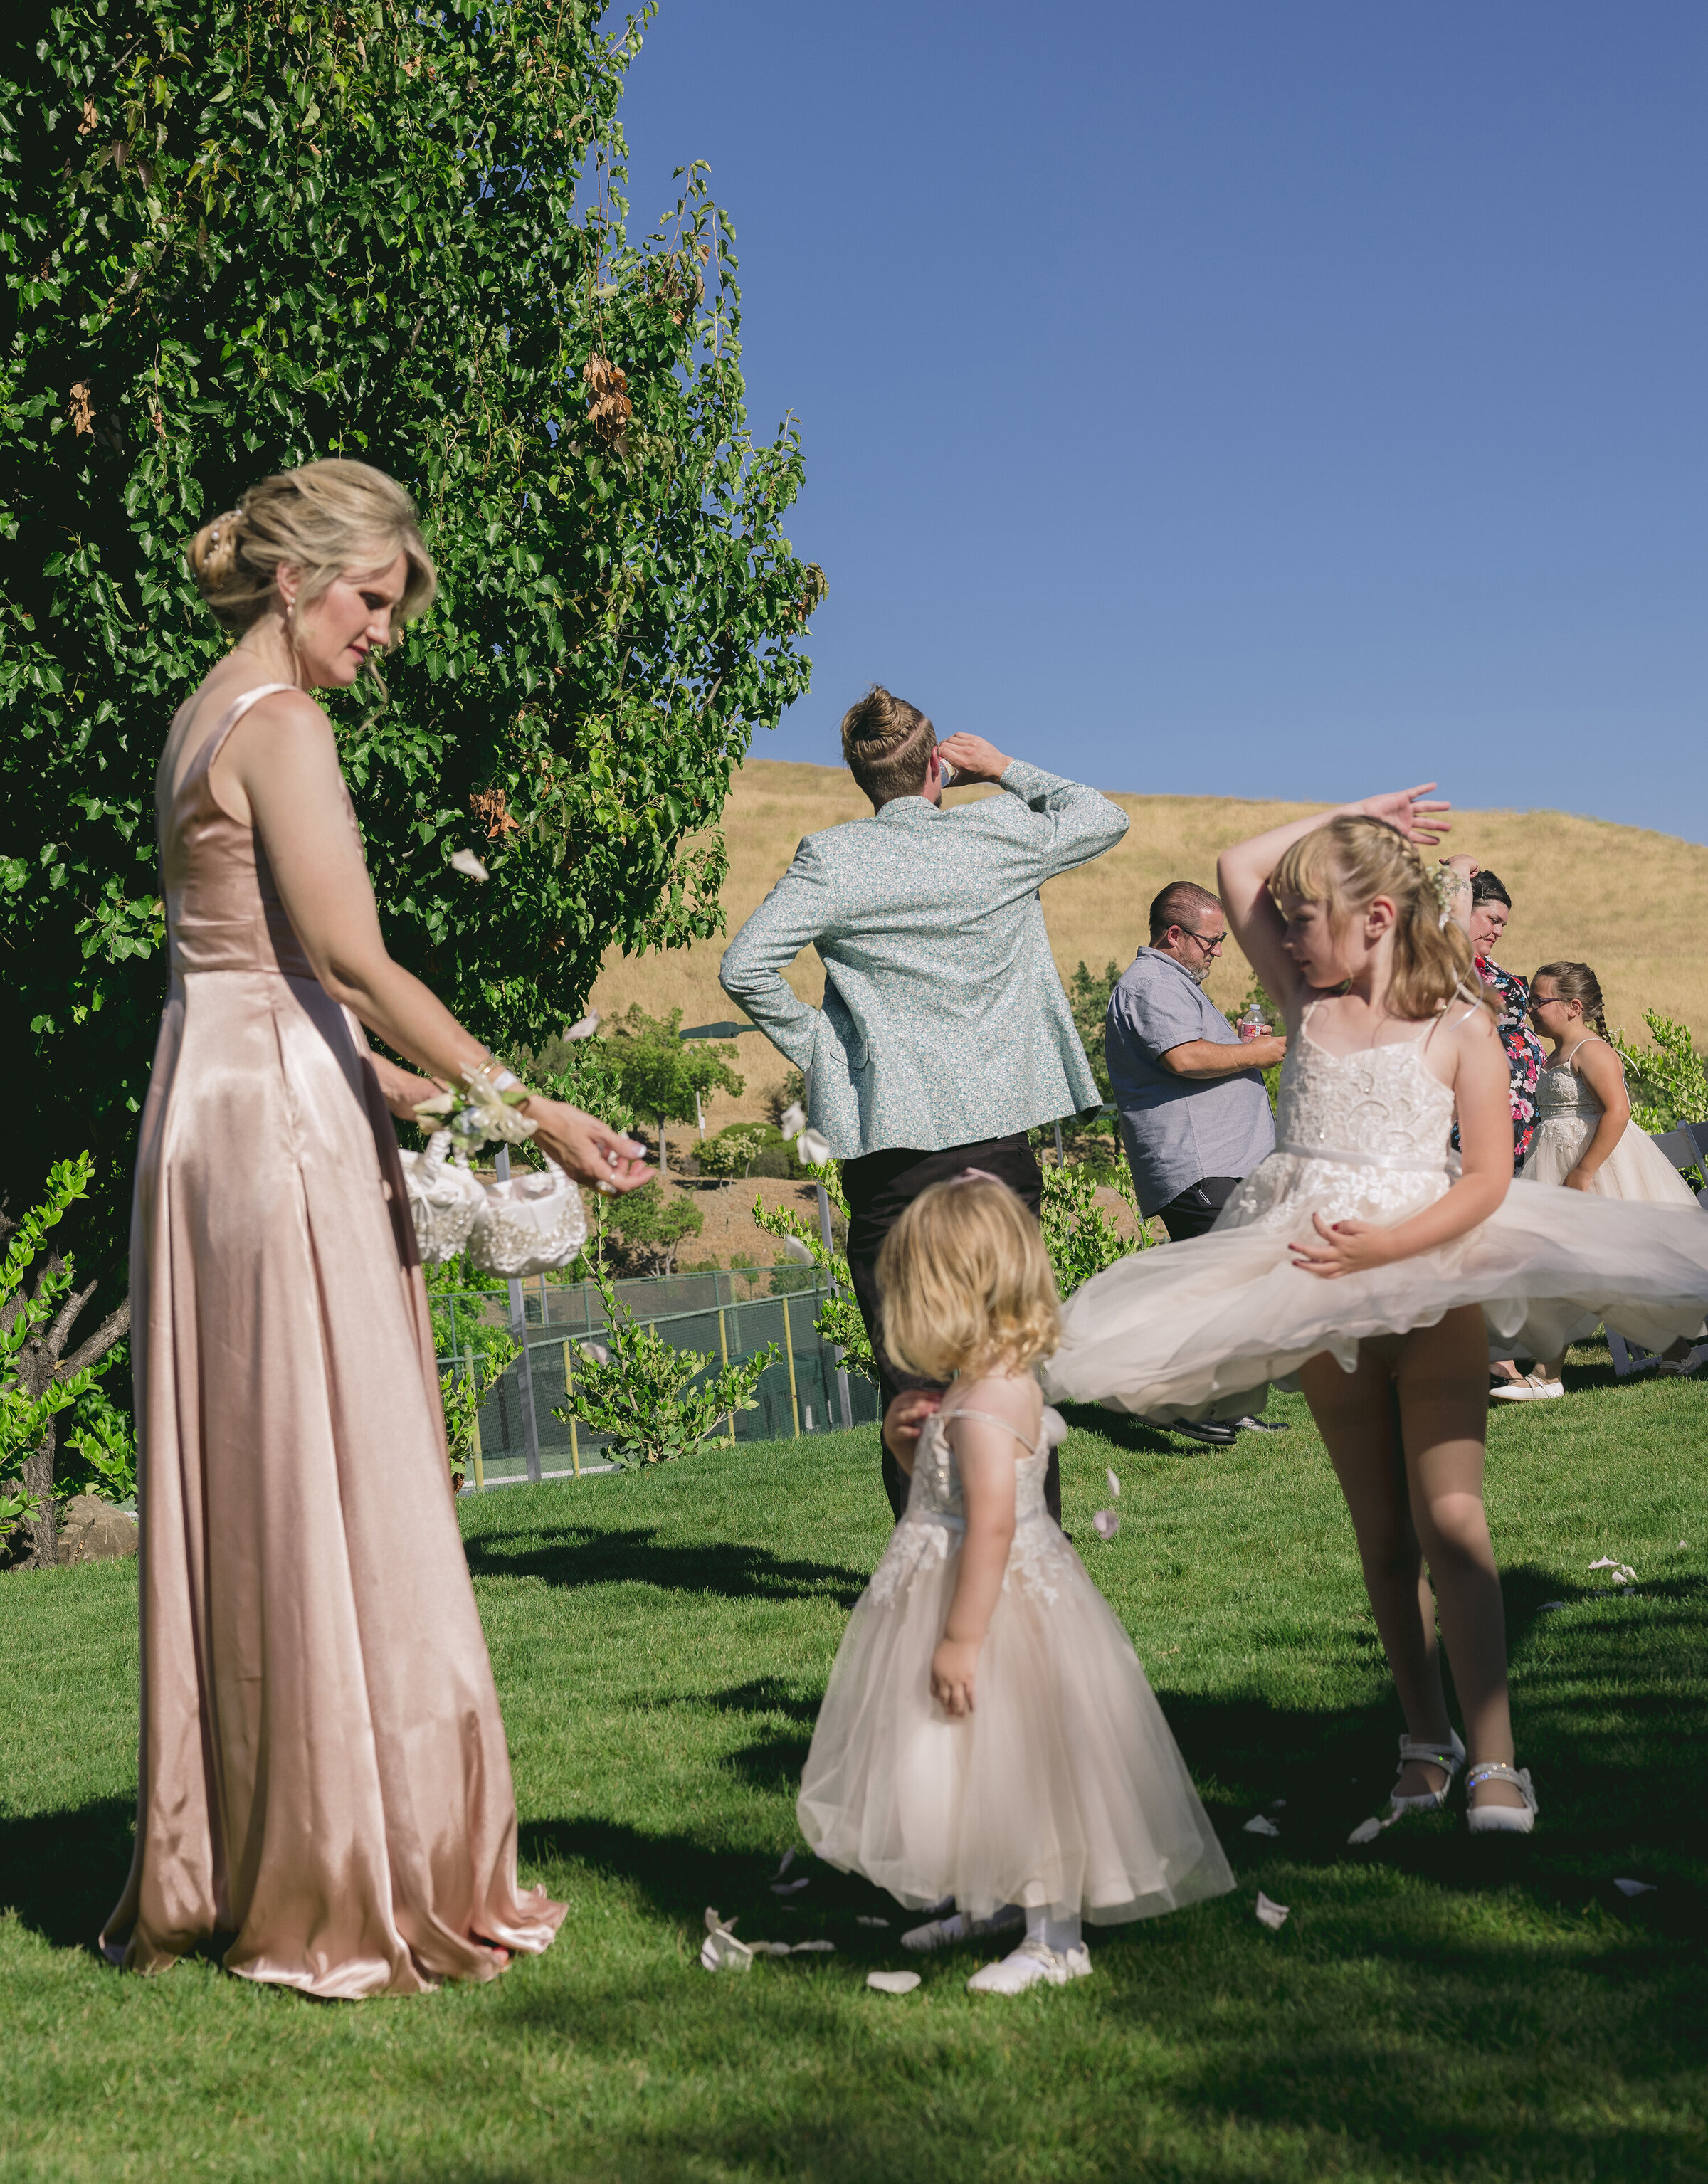 San Francisco Wedding Photographer with a documentary style